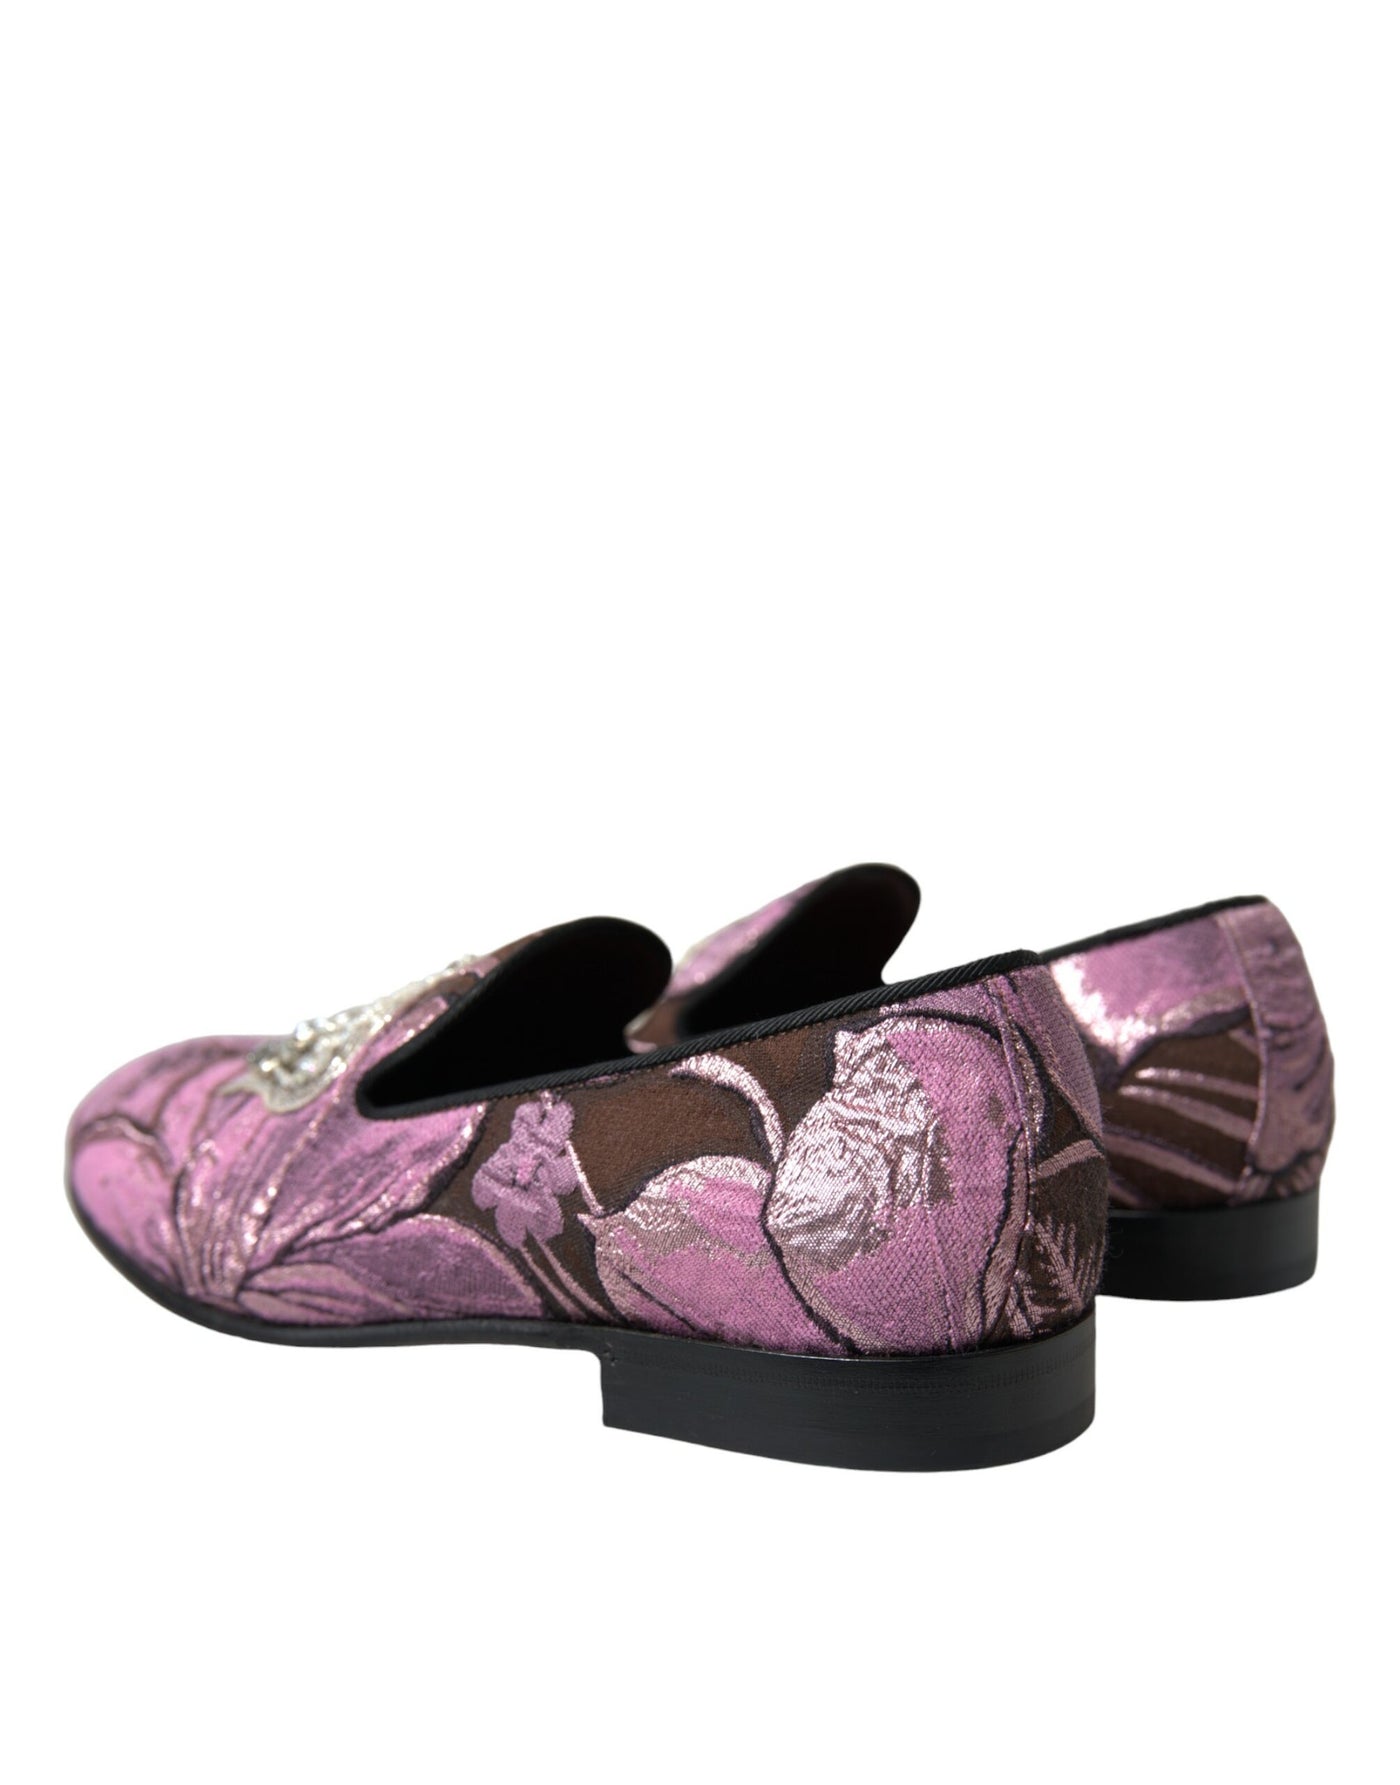 Dolce & Gabbana Pink Printed Crystal Embellished Loafers Dress Shoes